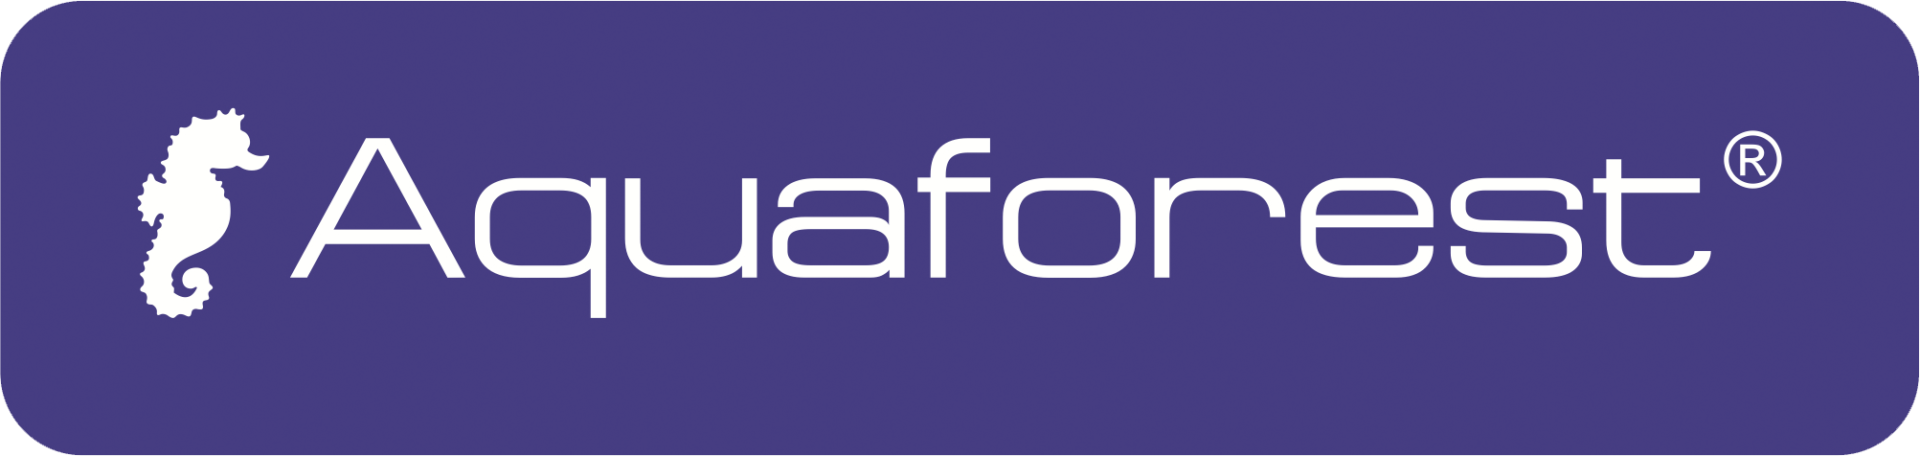 aquaforest logo